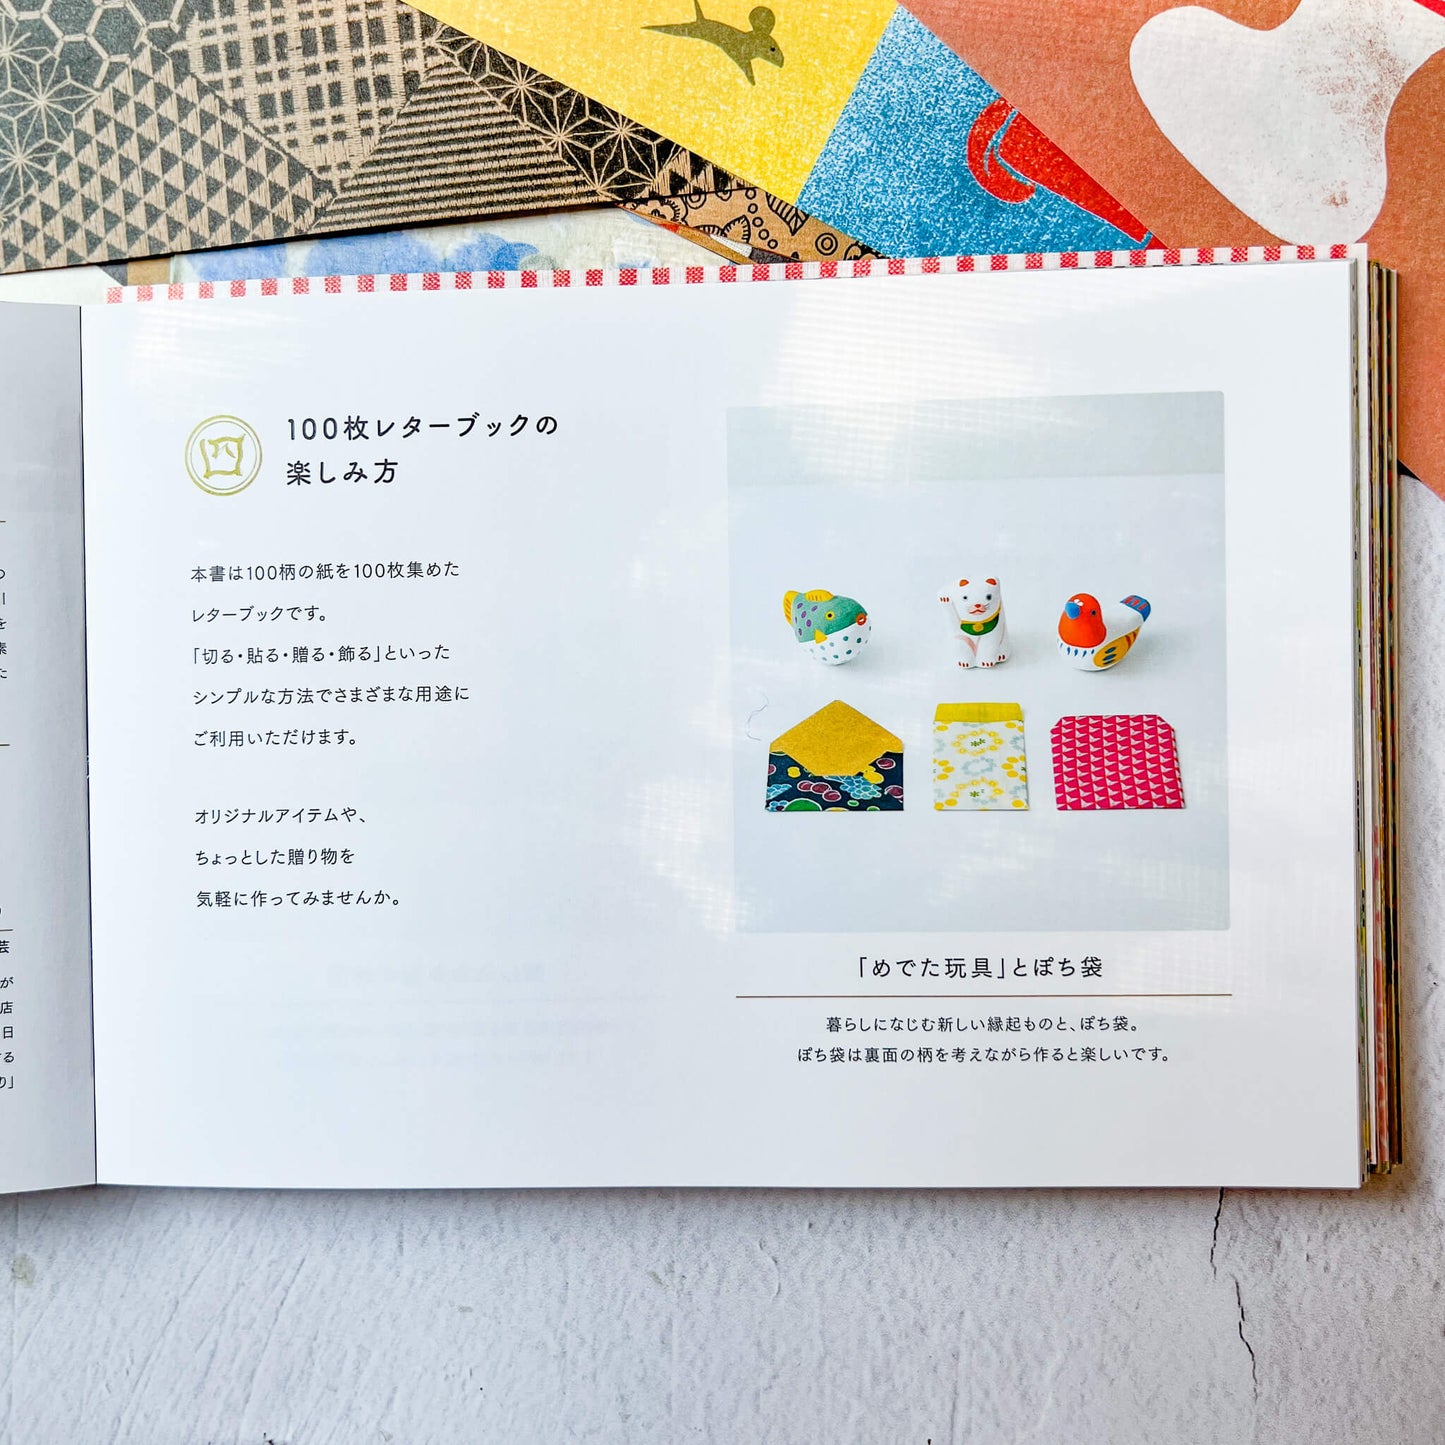 100 Art Crafting Papers Book : Nakagawa Masashichi ShotenNagamochi Shop